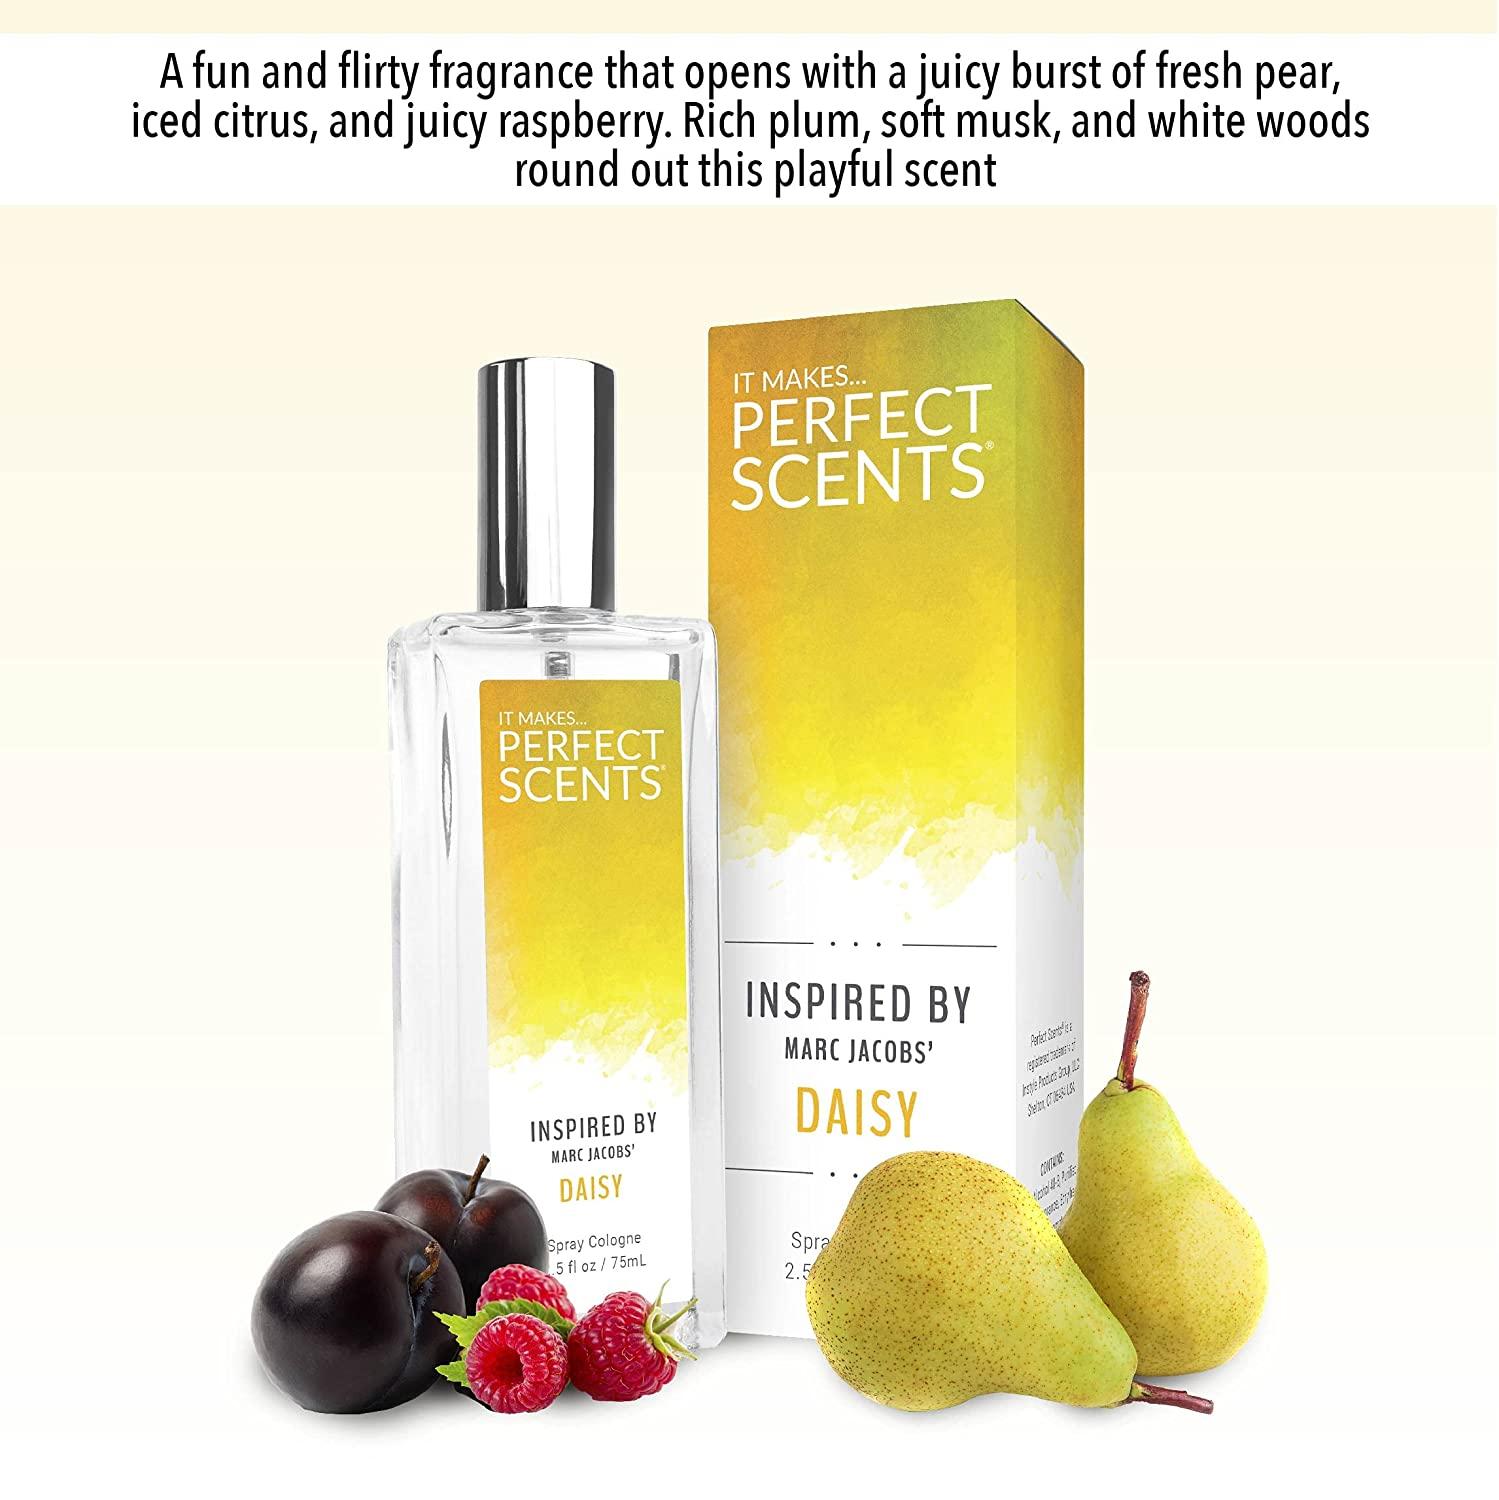  Perfect Scents Fragrances